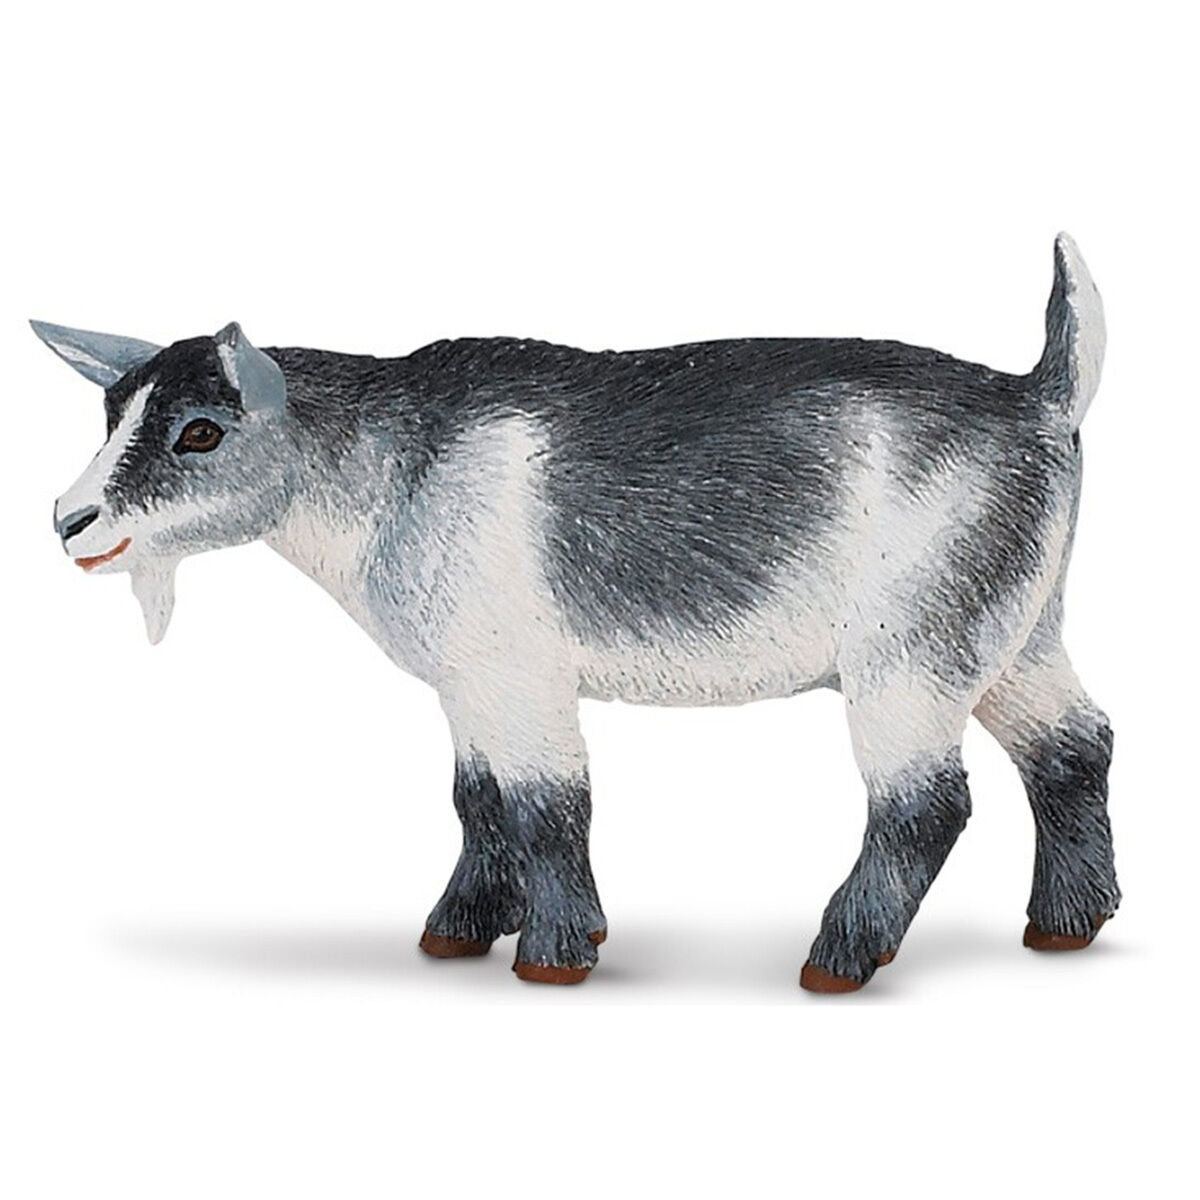 Pygmy Nanny Goat Safari Farm Safari Ltd NEW Toys Animals Figurines Collectibles